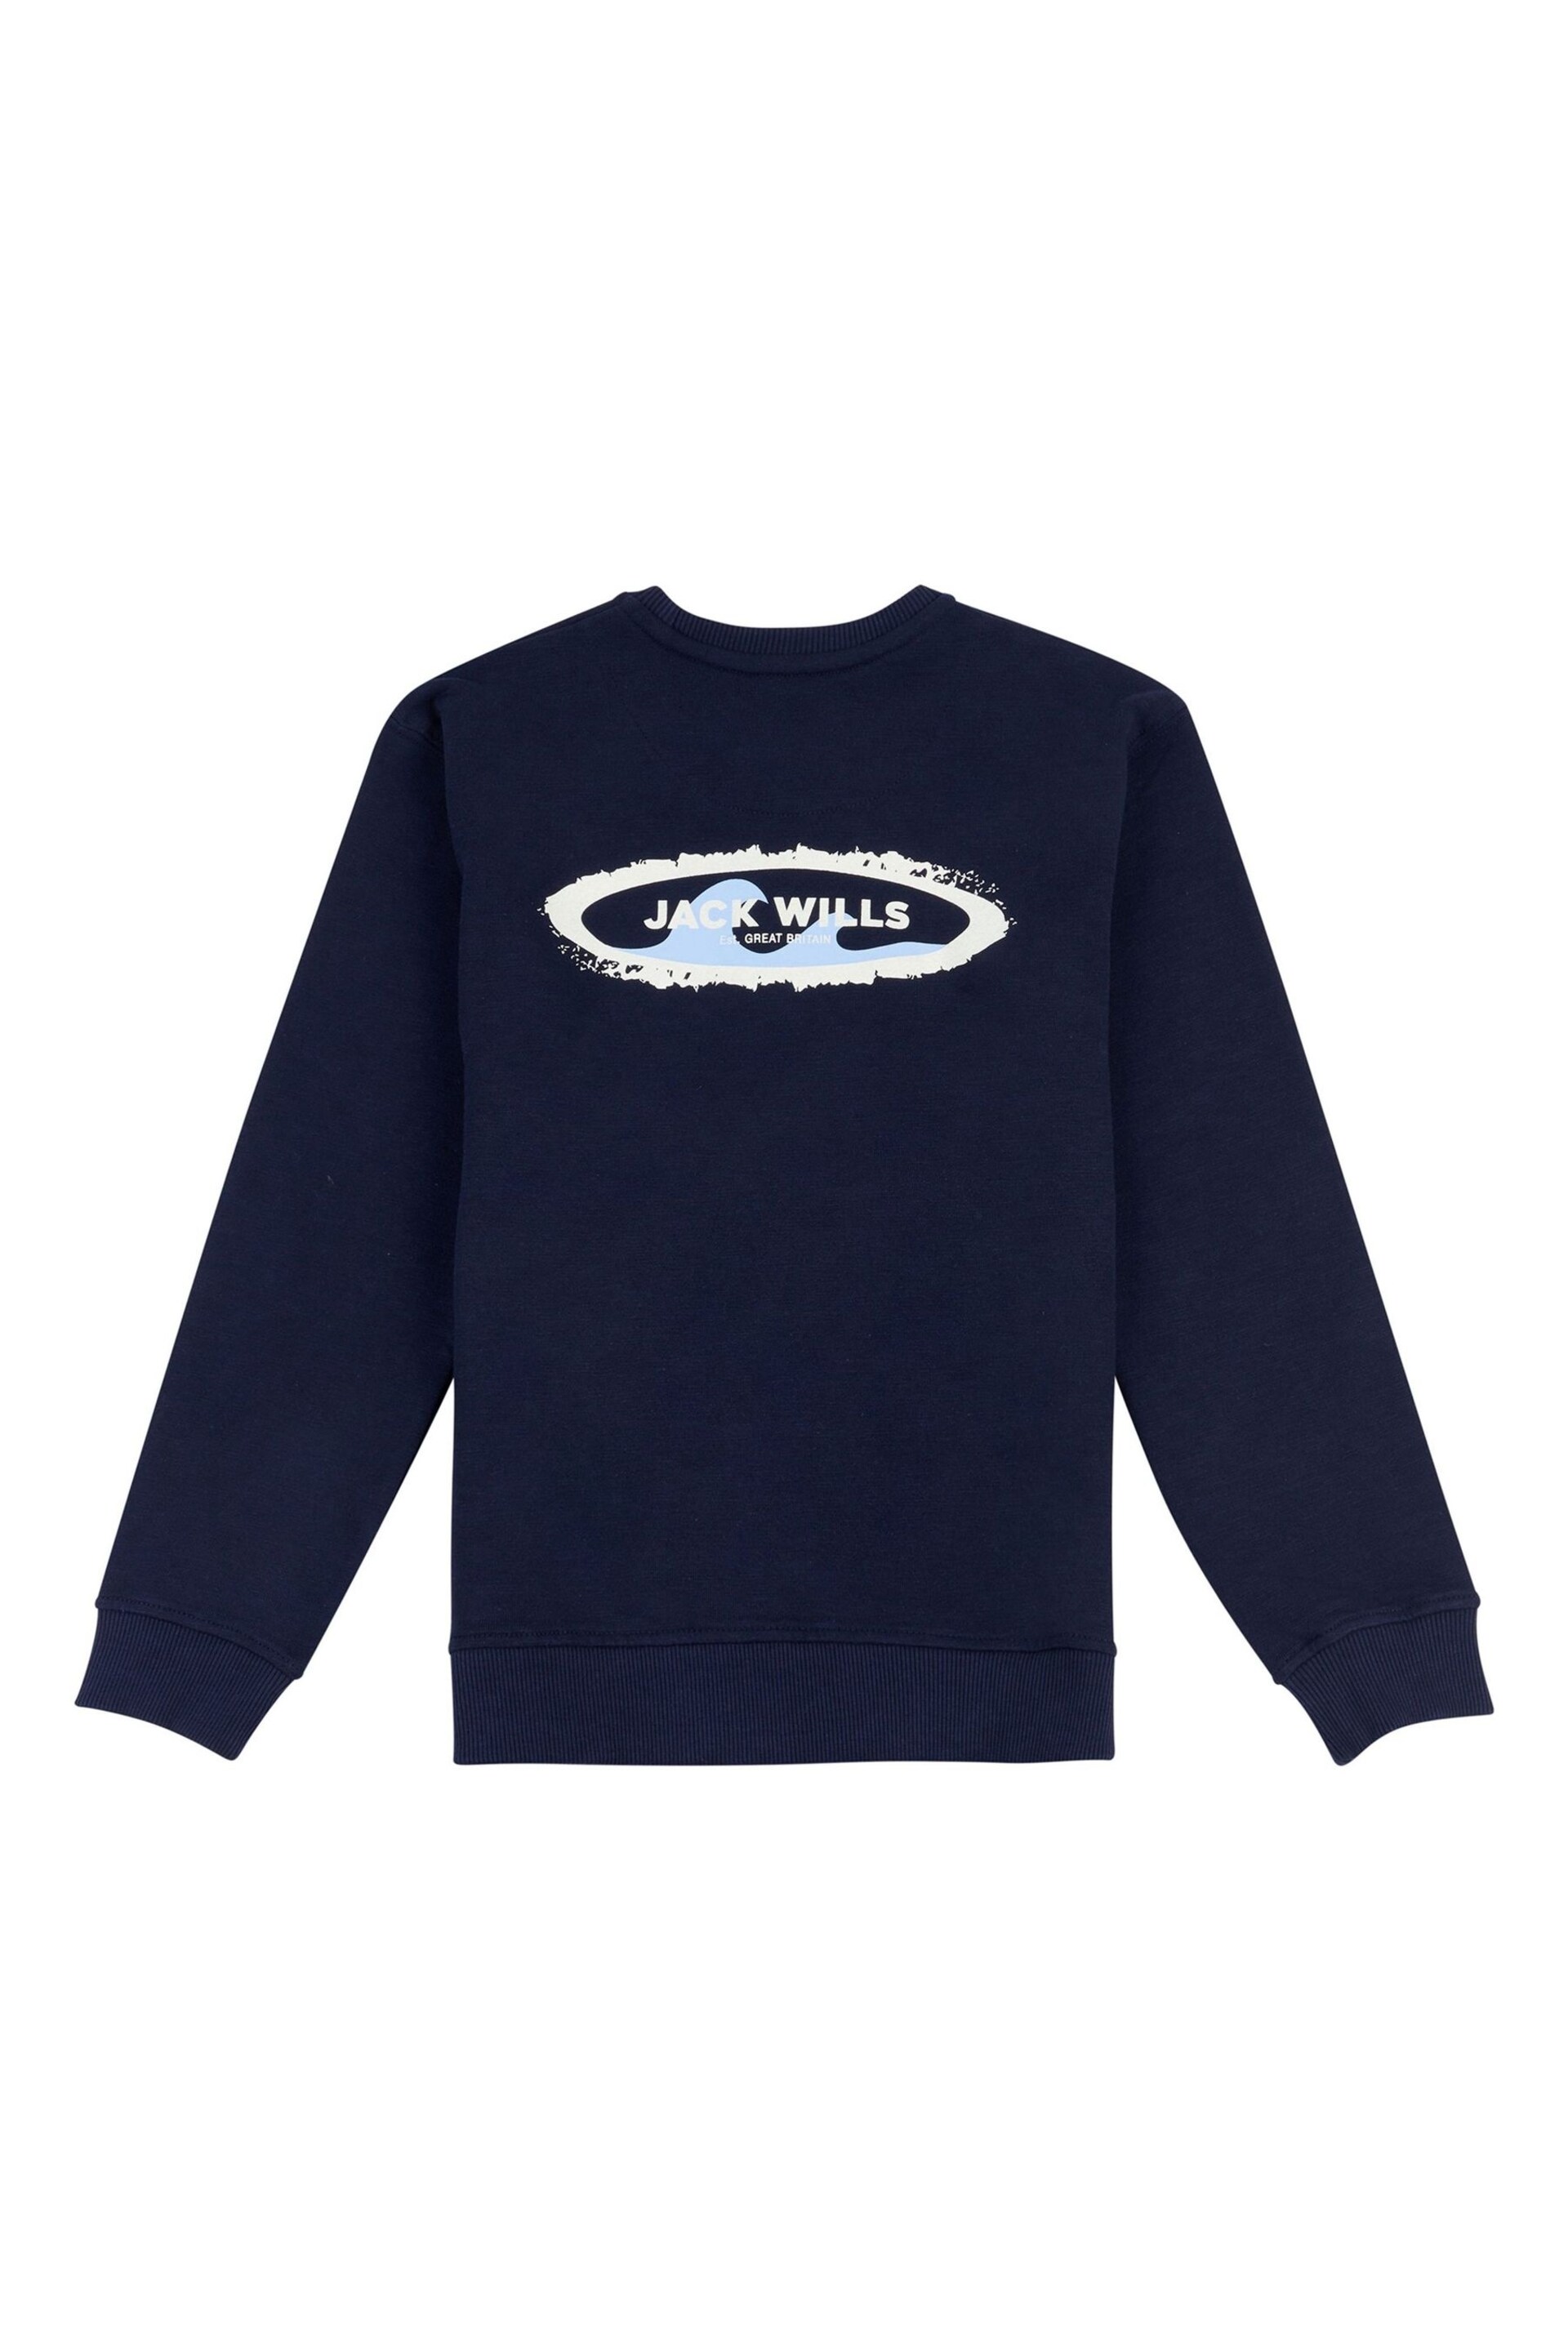 Jack Wills Oversized Blue Surf Slub LB Crew Sweatshirt - Image 2 of 3